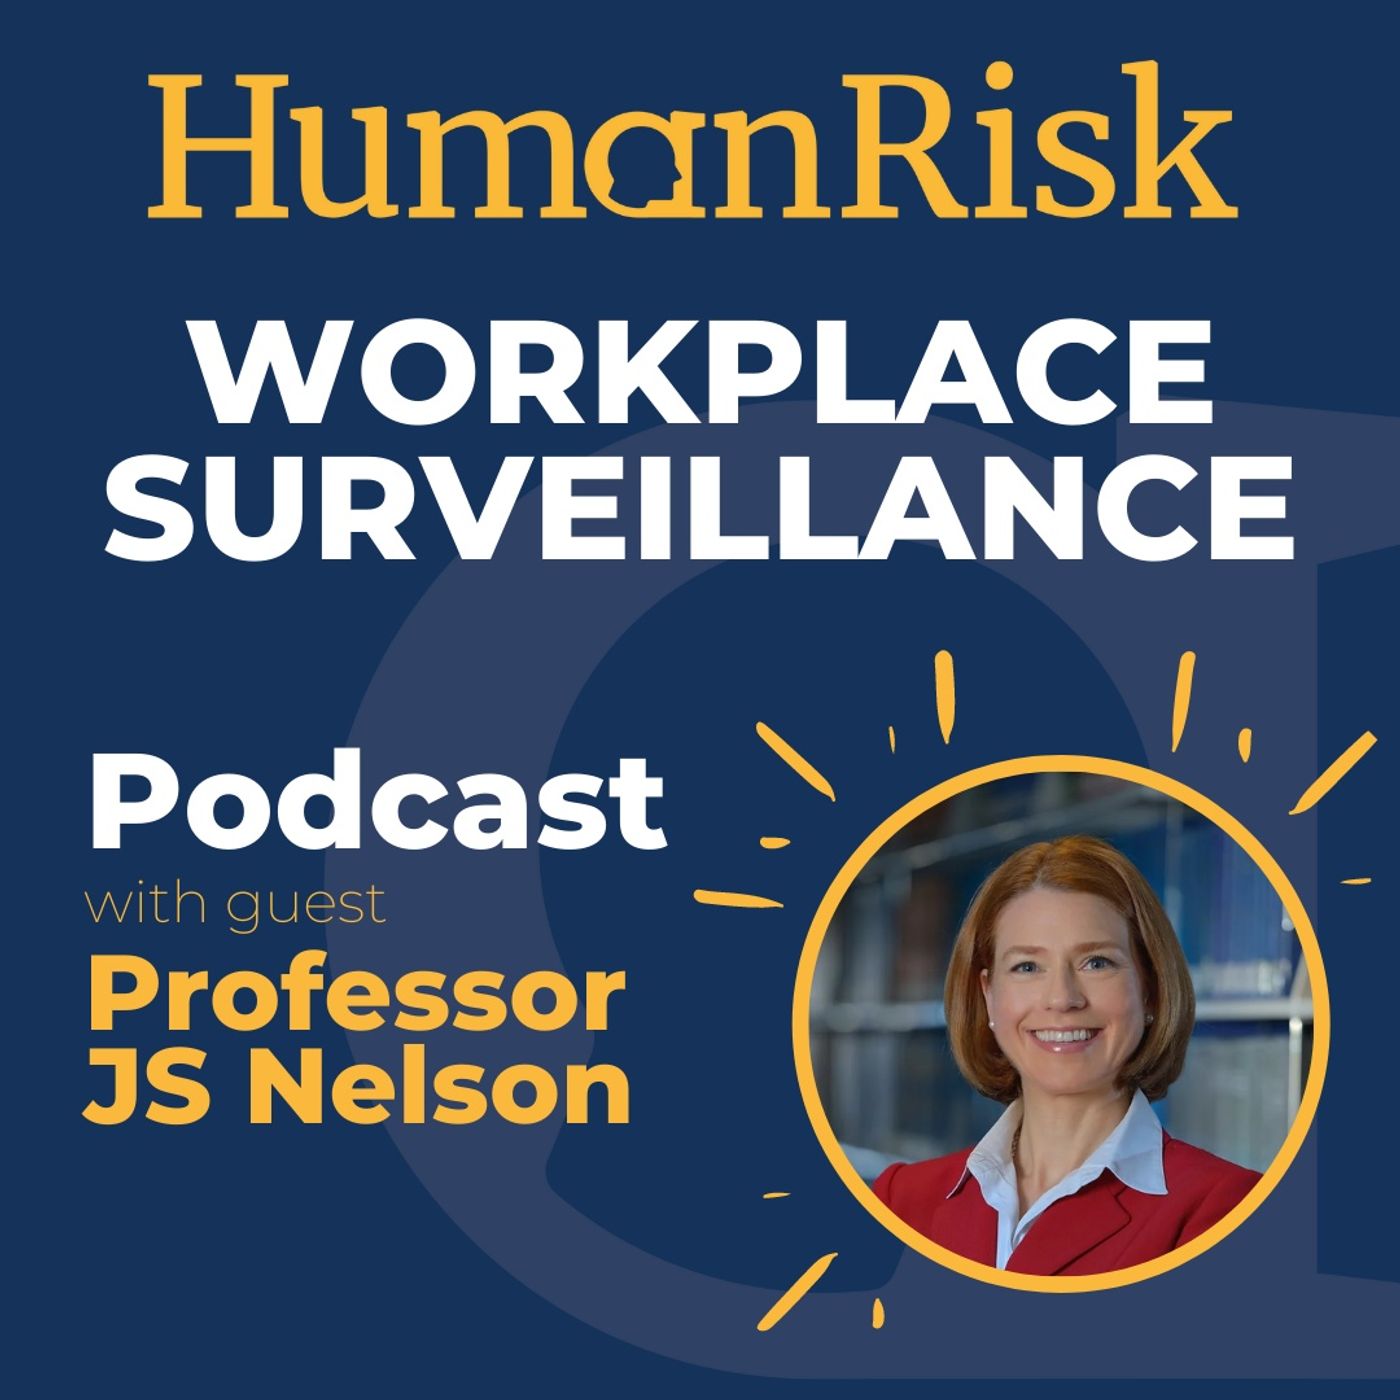 Professor J S Nelson on Workplace Surveillance